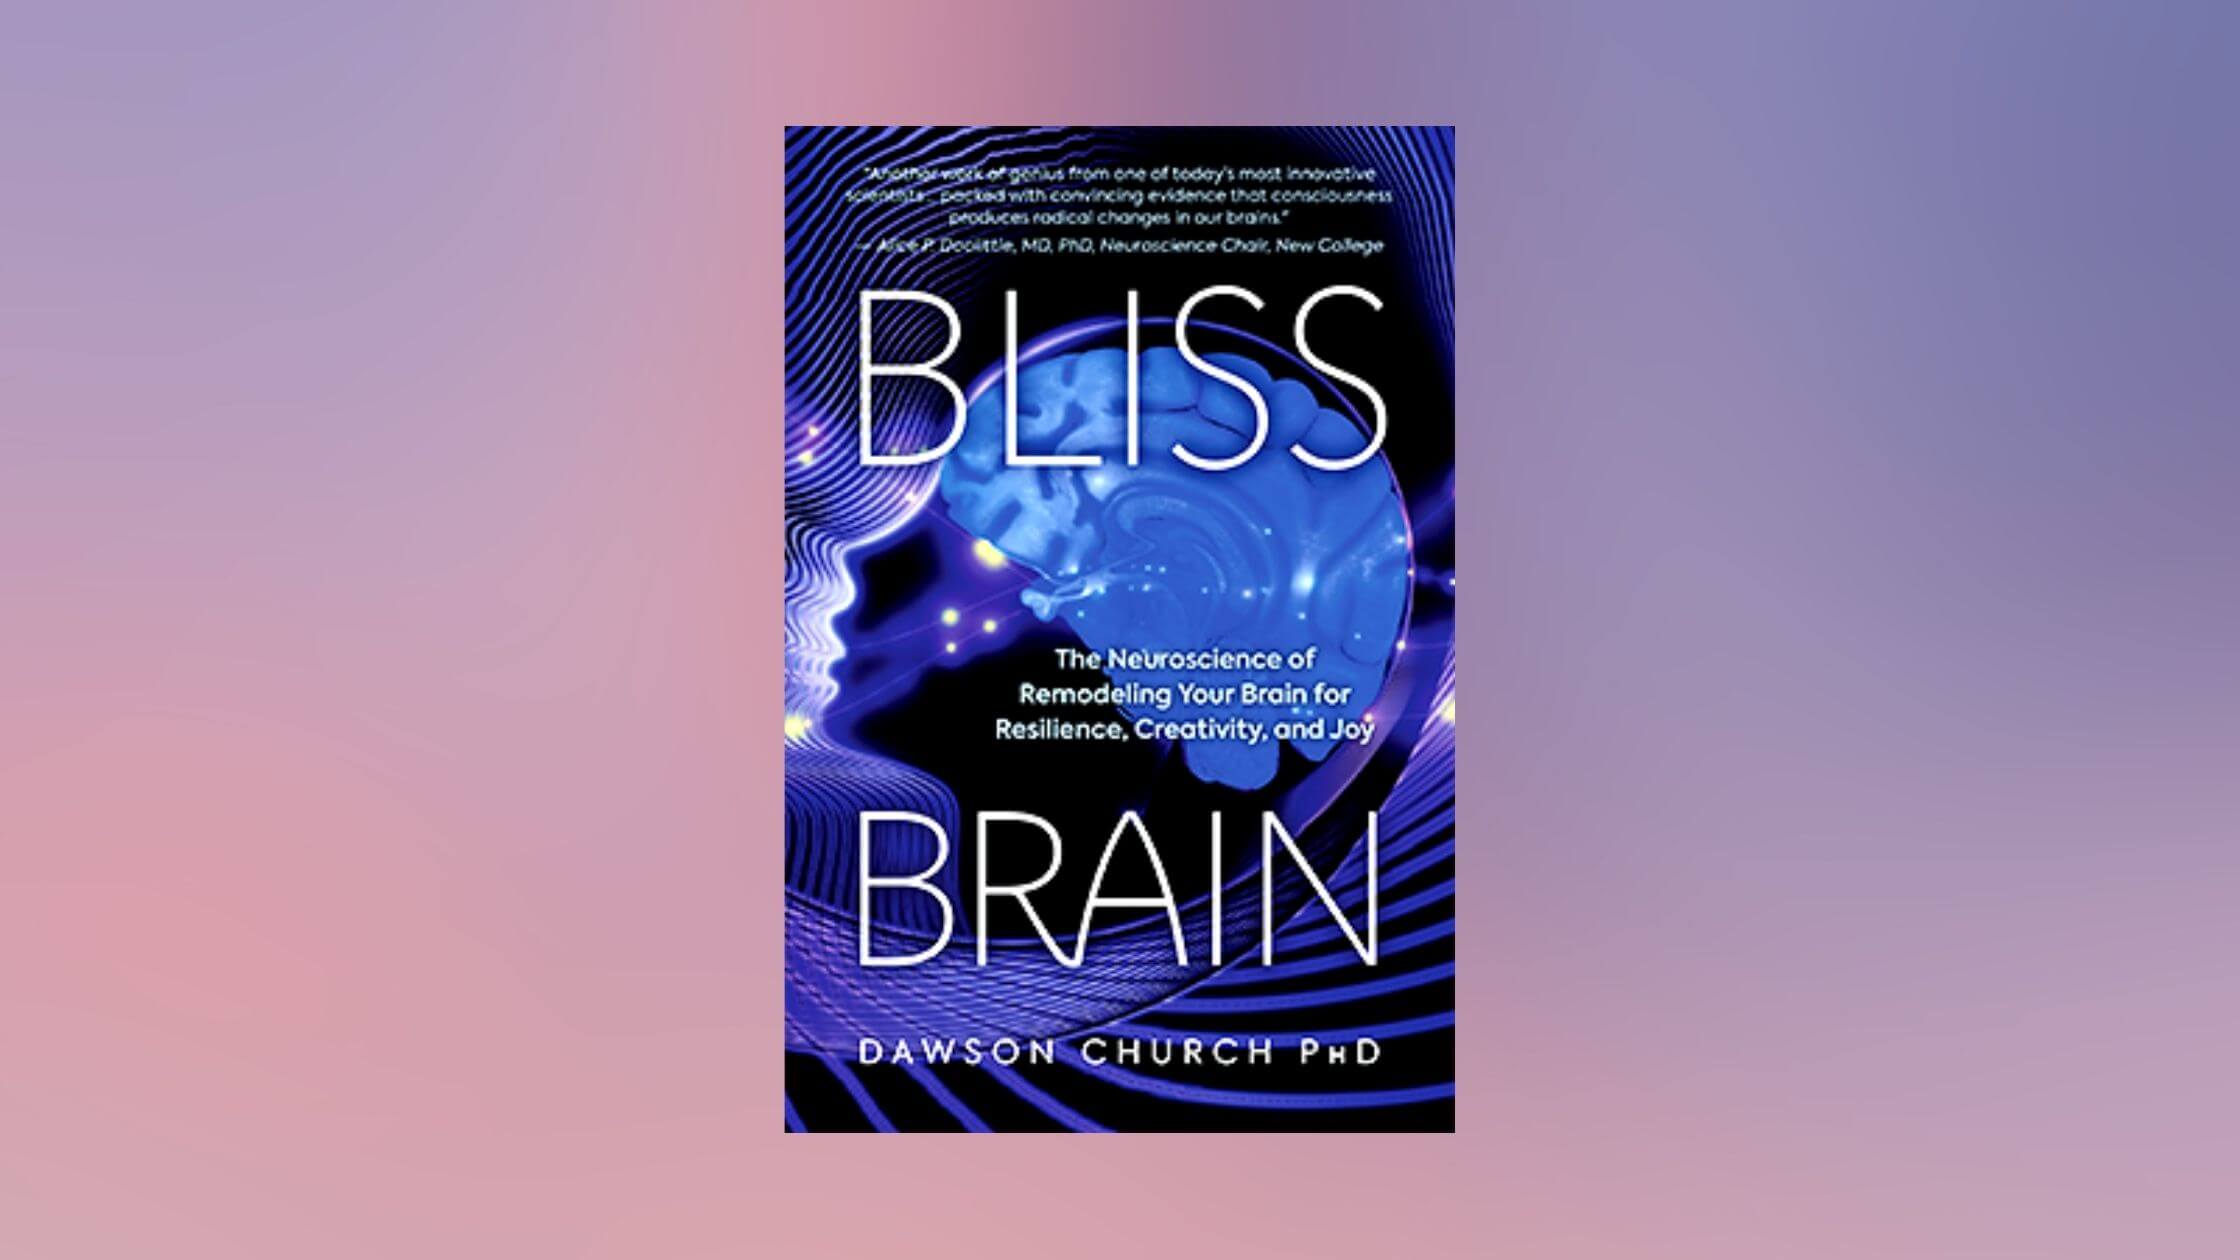 Bliss Brain Reviews